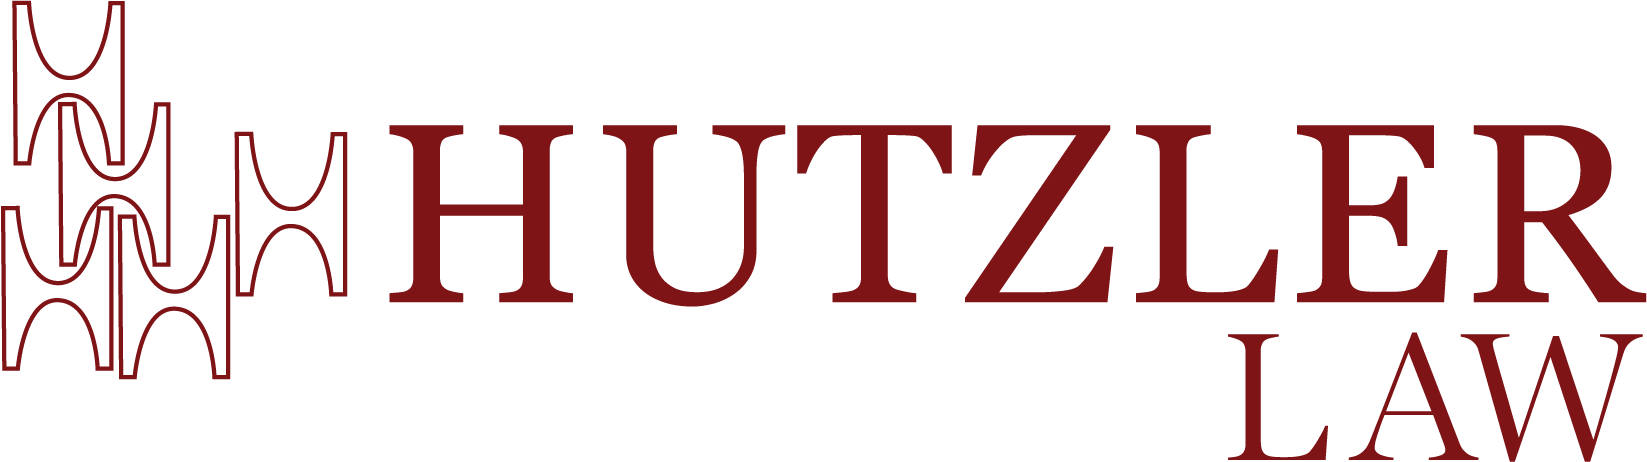 Hutzler Law Logo